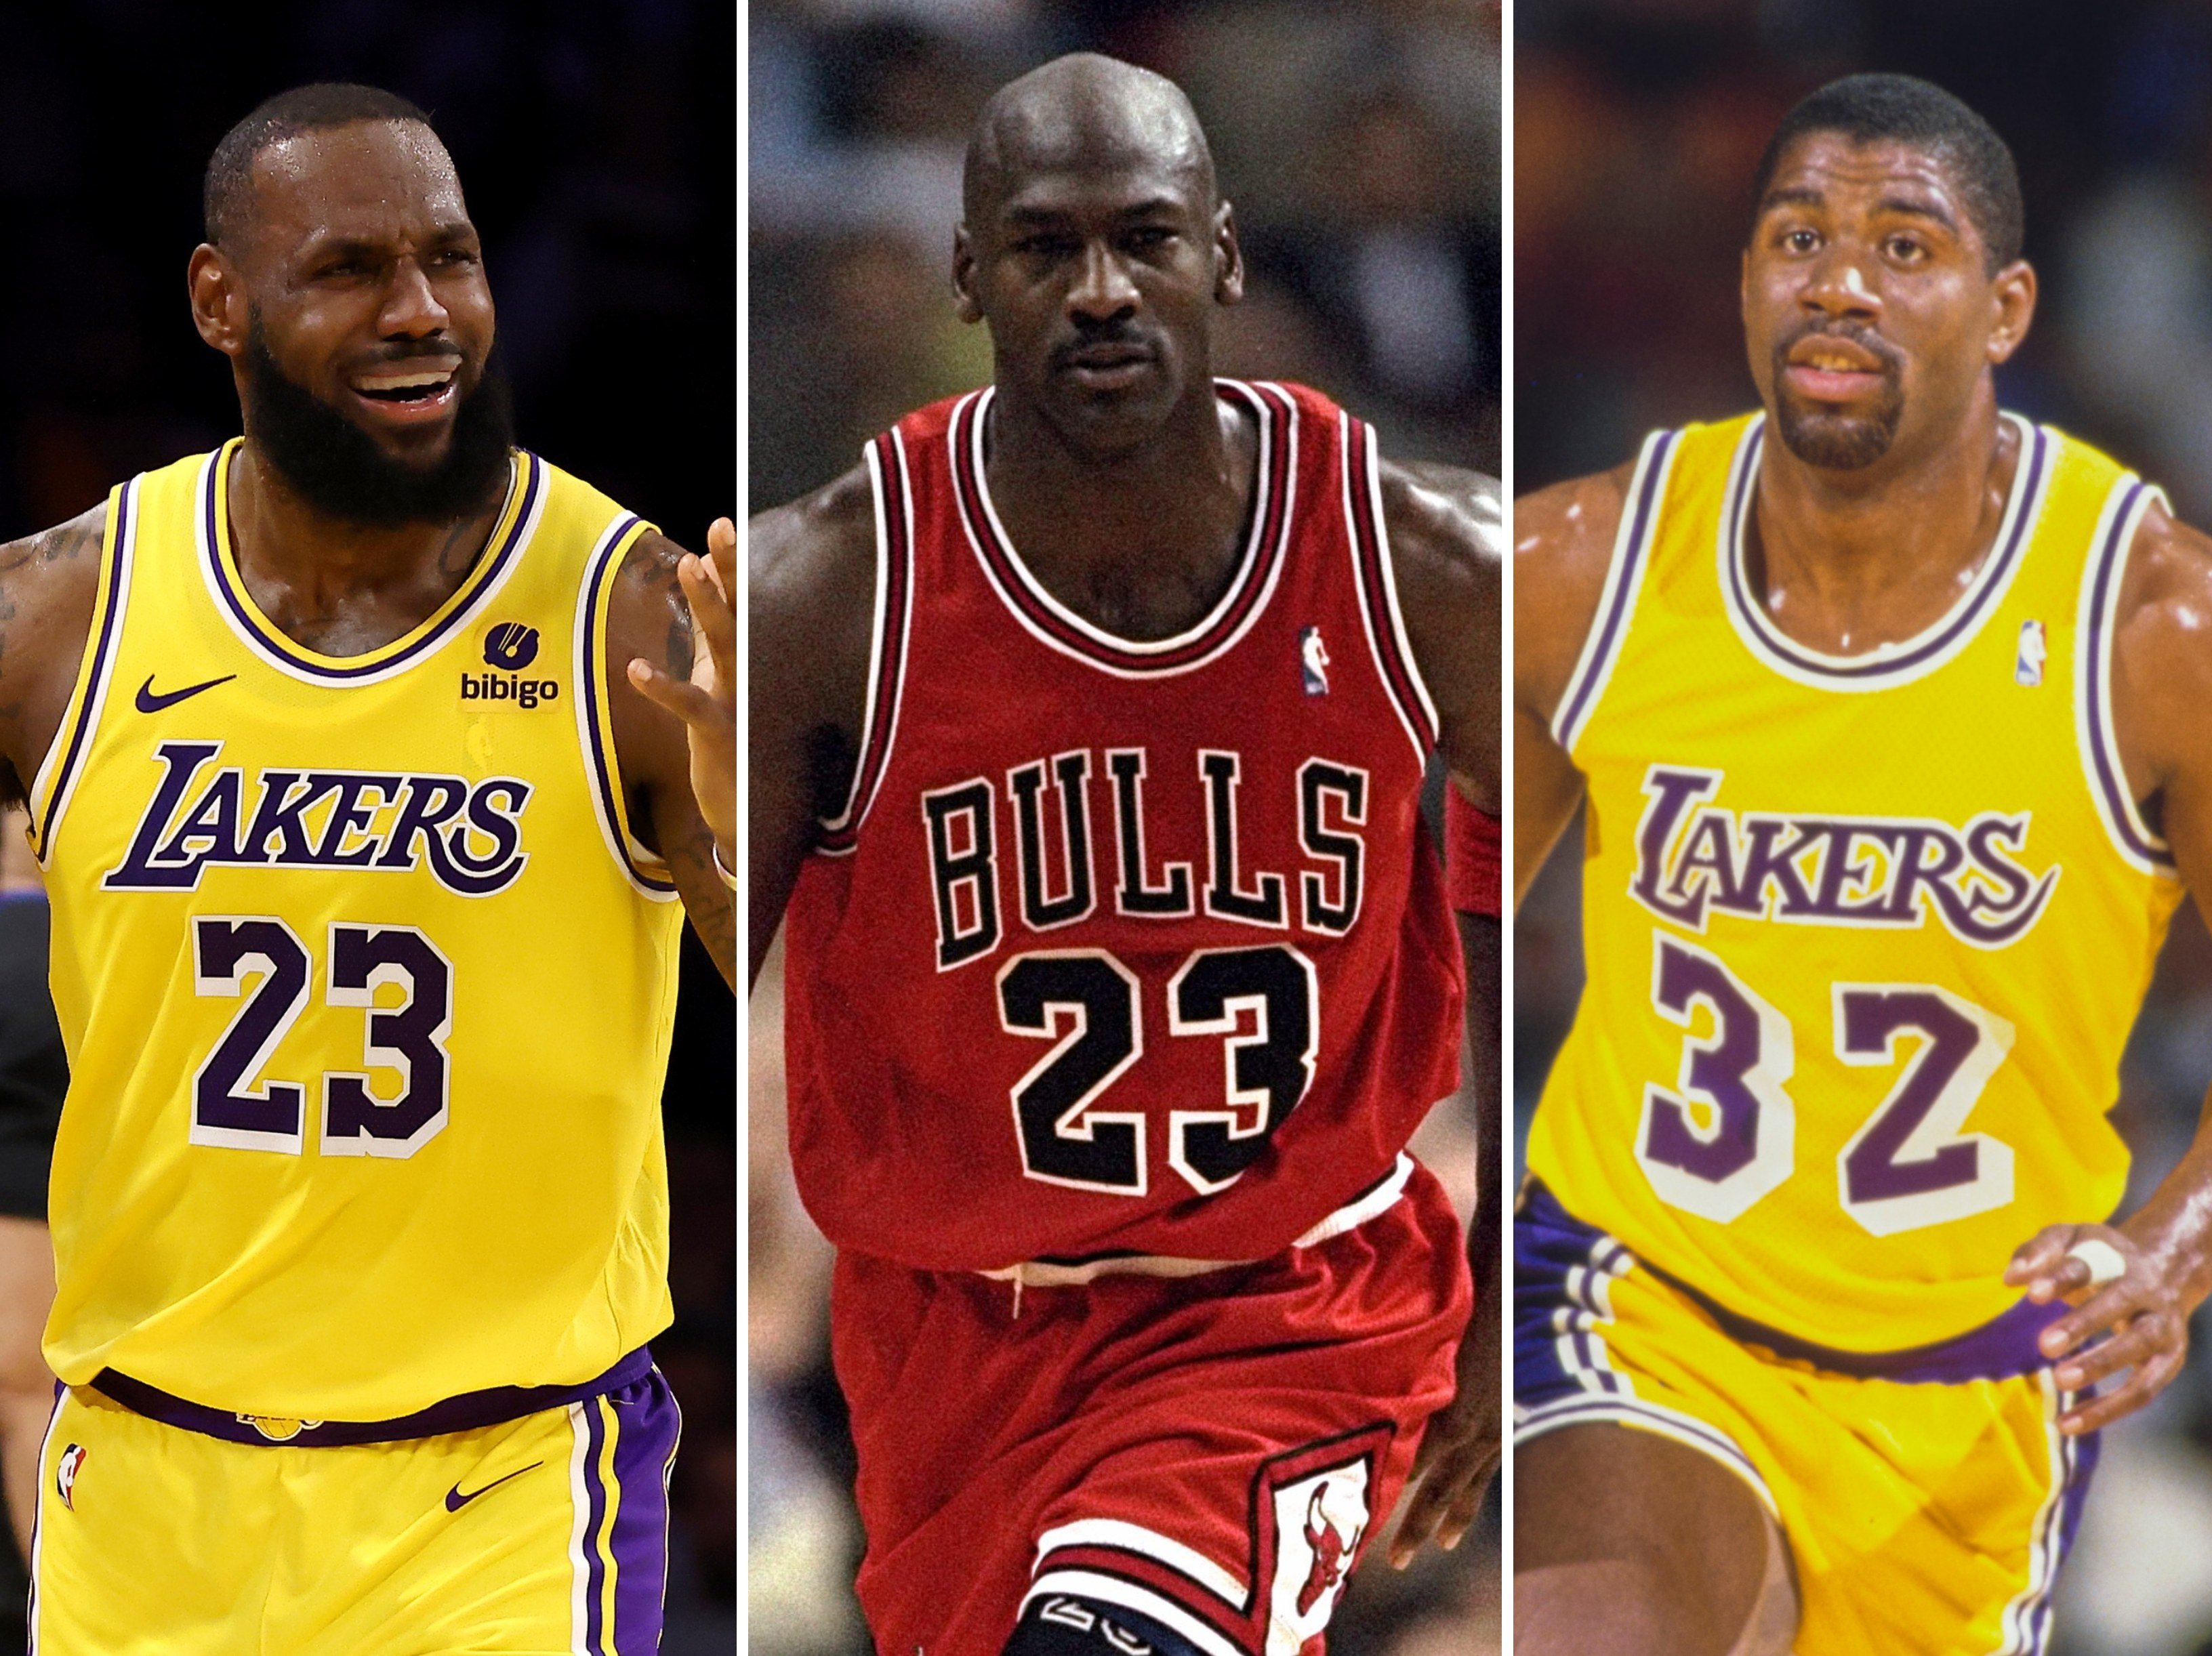 NBA’s top money men: LeBron James, Michael Jordan and Magic Johnson. Photo: Getty Images